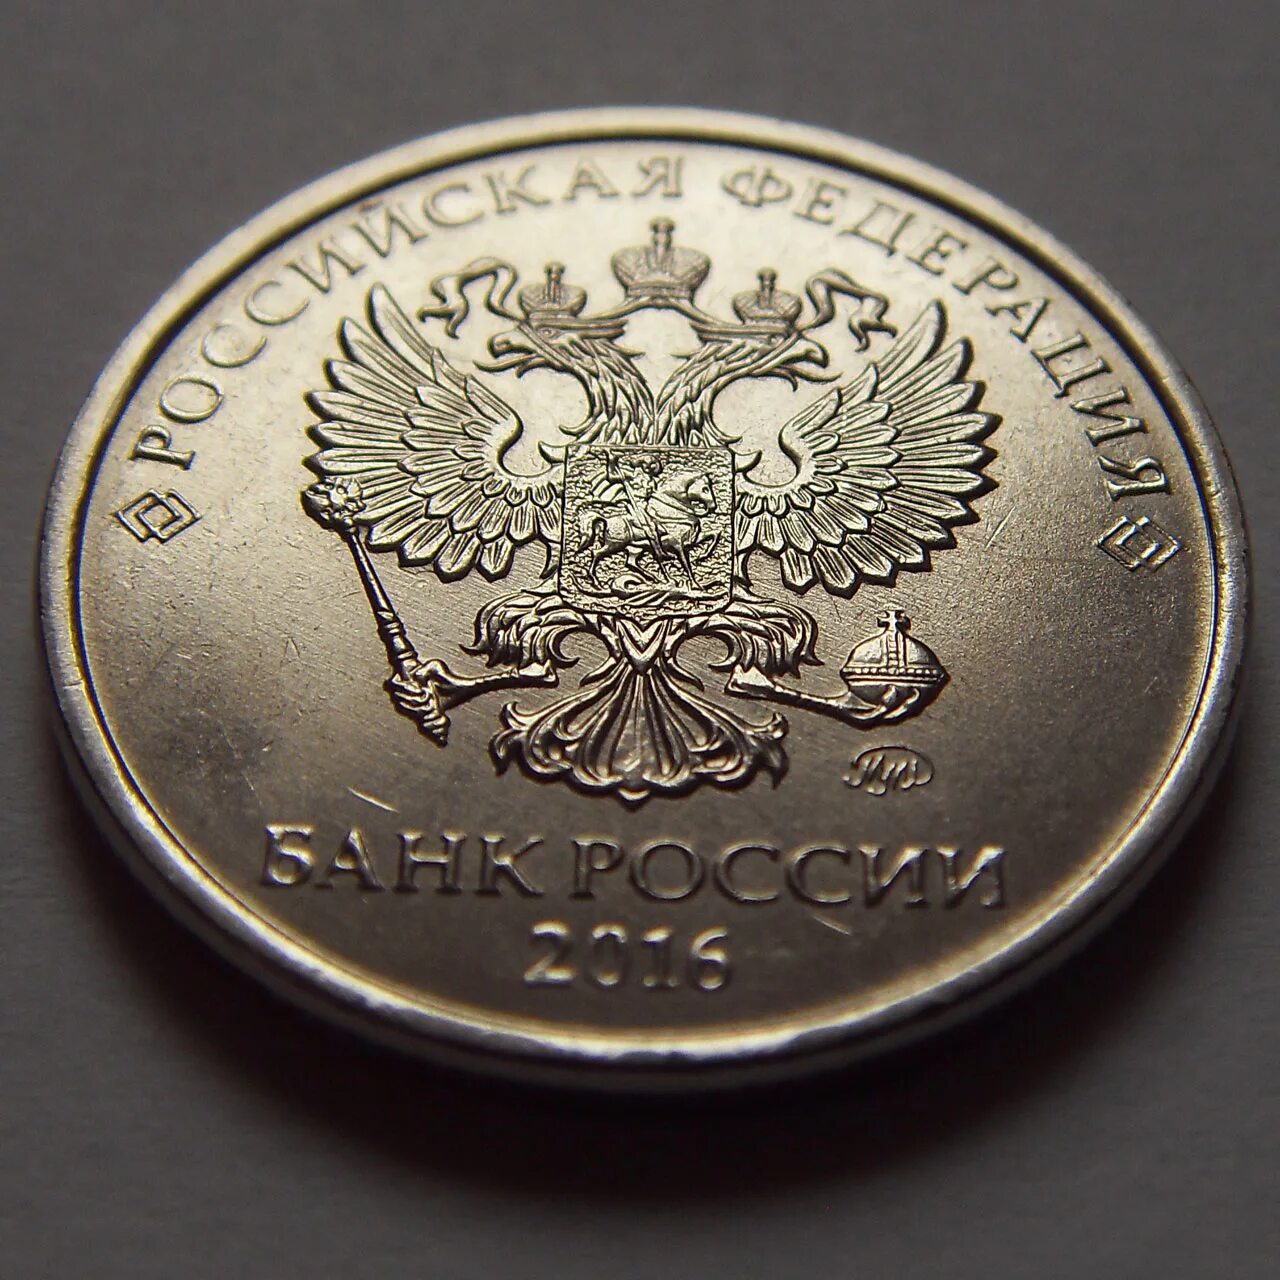 Рублей 2016 года. 2 Рубля 2016 СПМД. Монета 2 рубля 2016 года СПМД. 1 Рубль 2016 года СПМД. Монета 1 руб 2016 года.